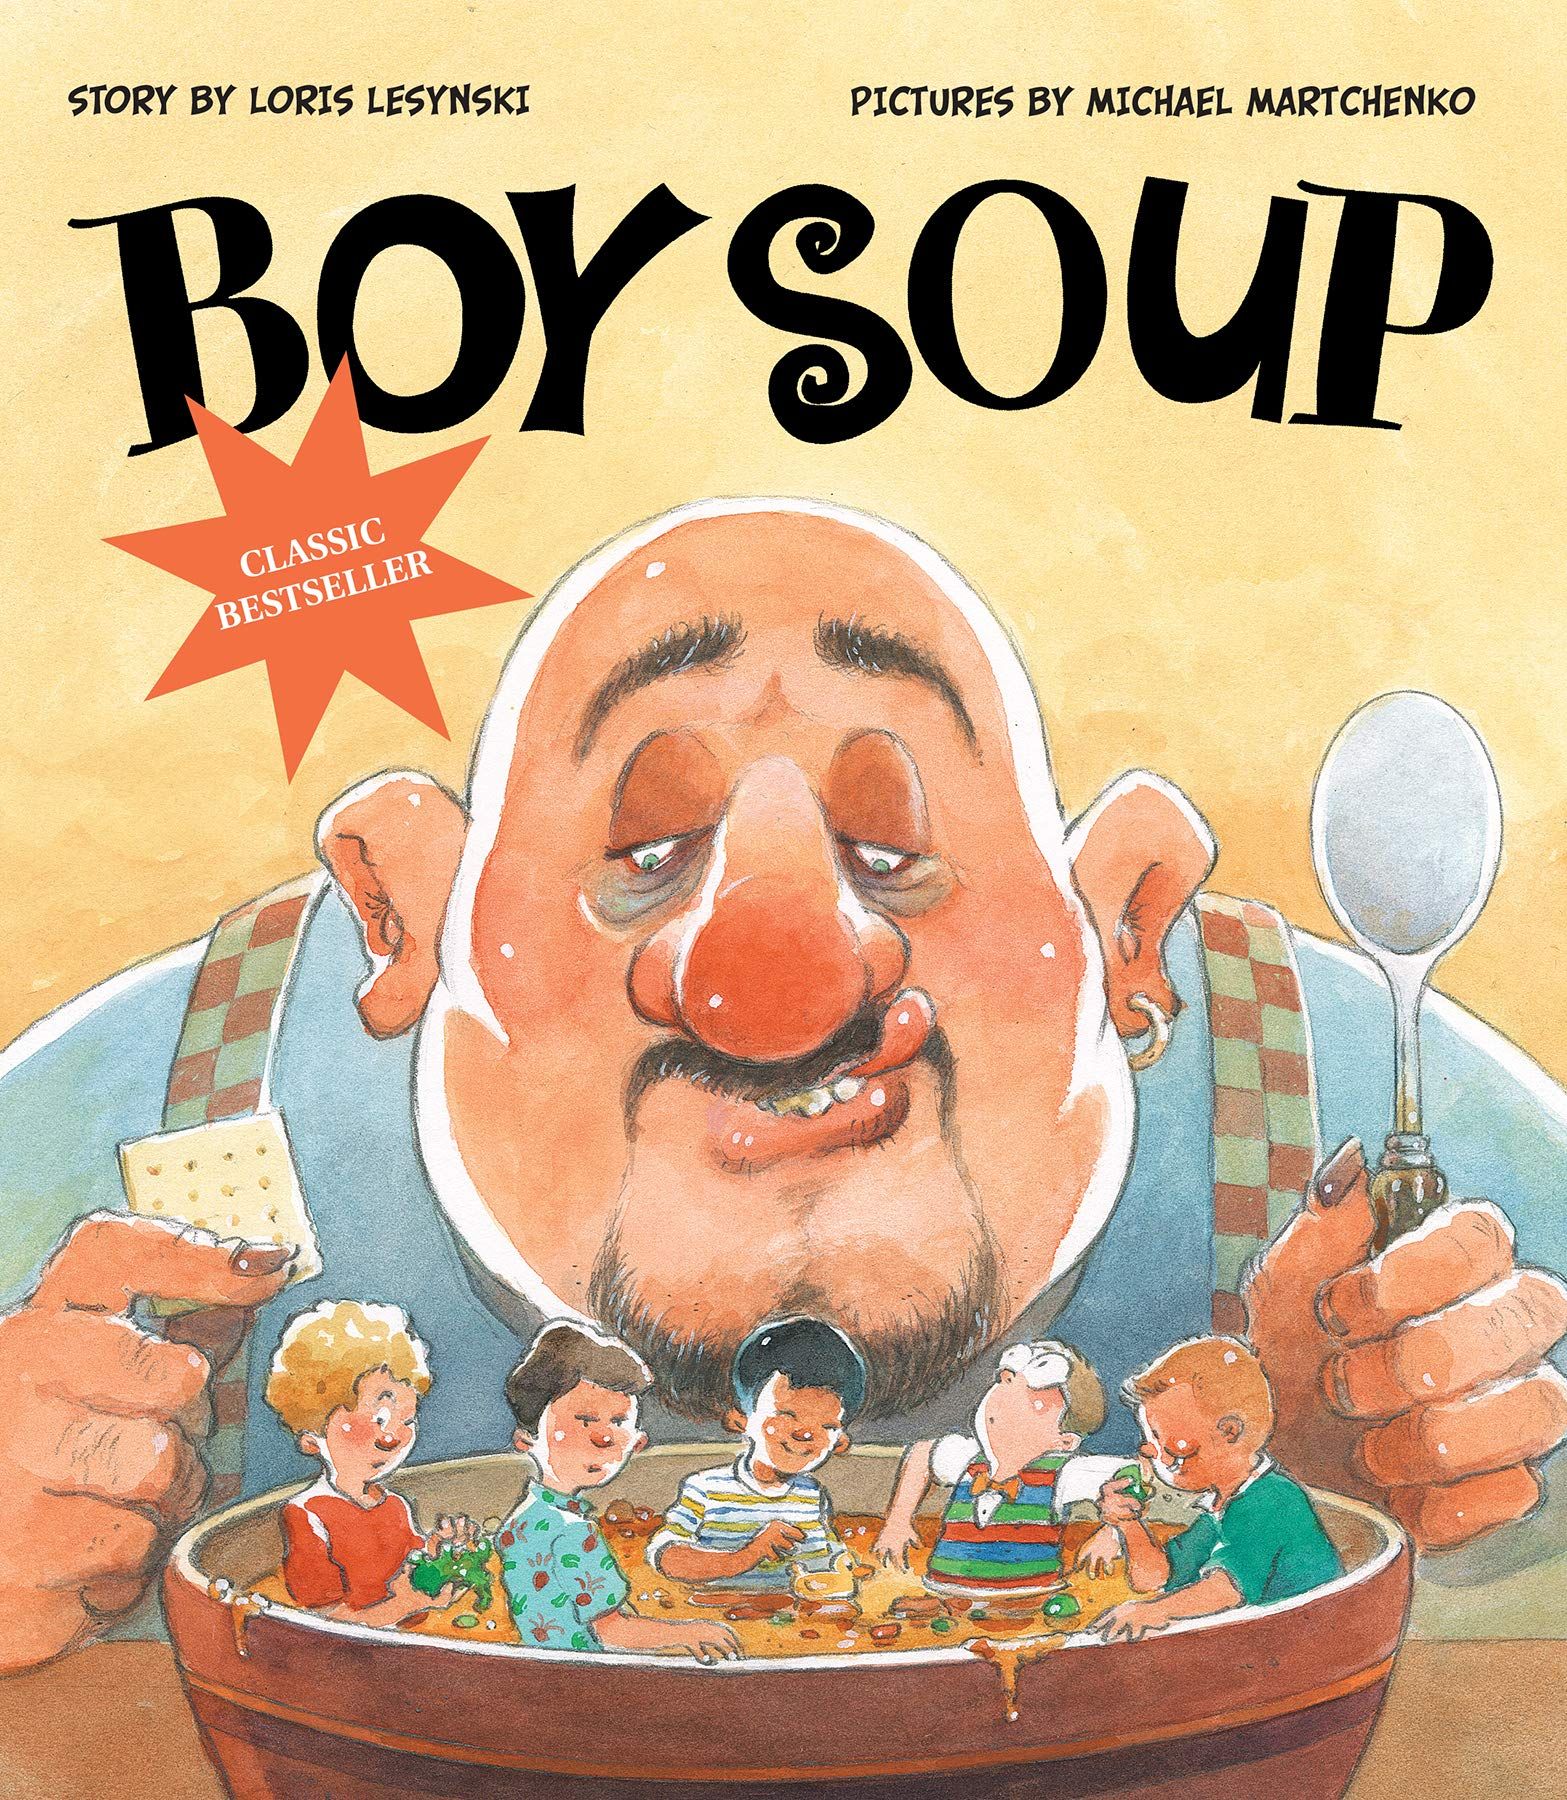 He the soup. "Soup boy". "Soup boy"+"Gucci, Maine". Soy Soup. Good boy Soup.